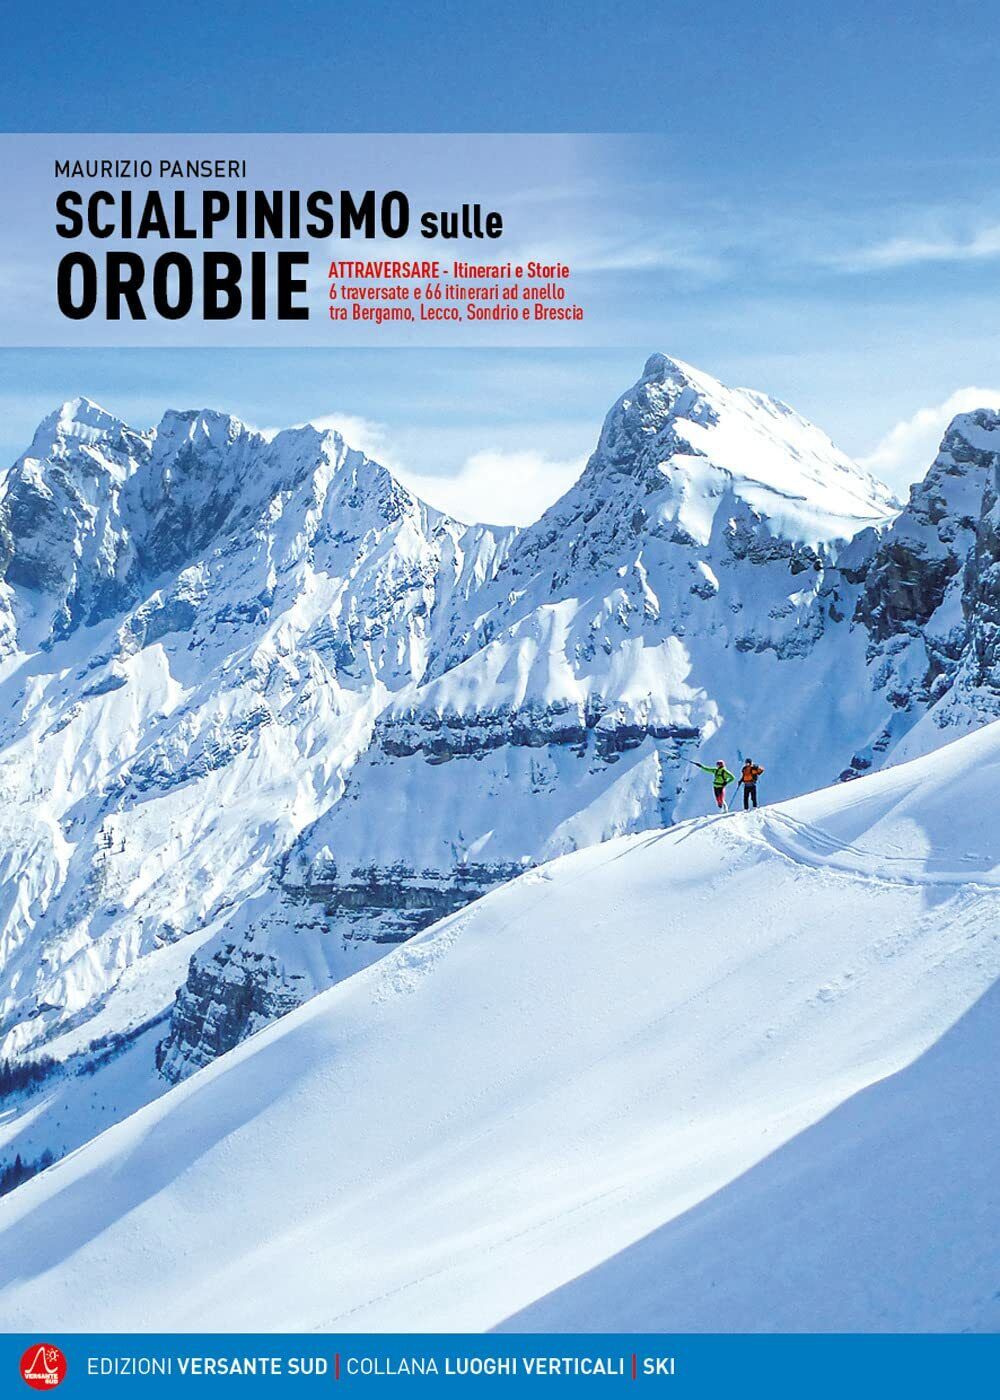 Scialpinismo sulle Orobie - Maurizio Panseri - Versante Sud, 2021